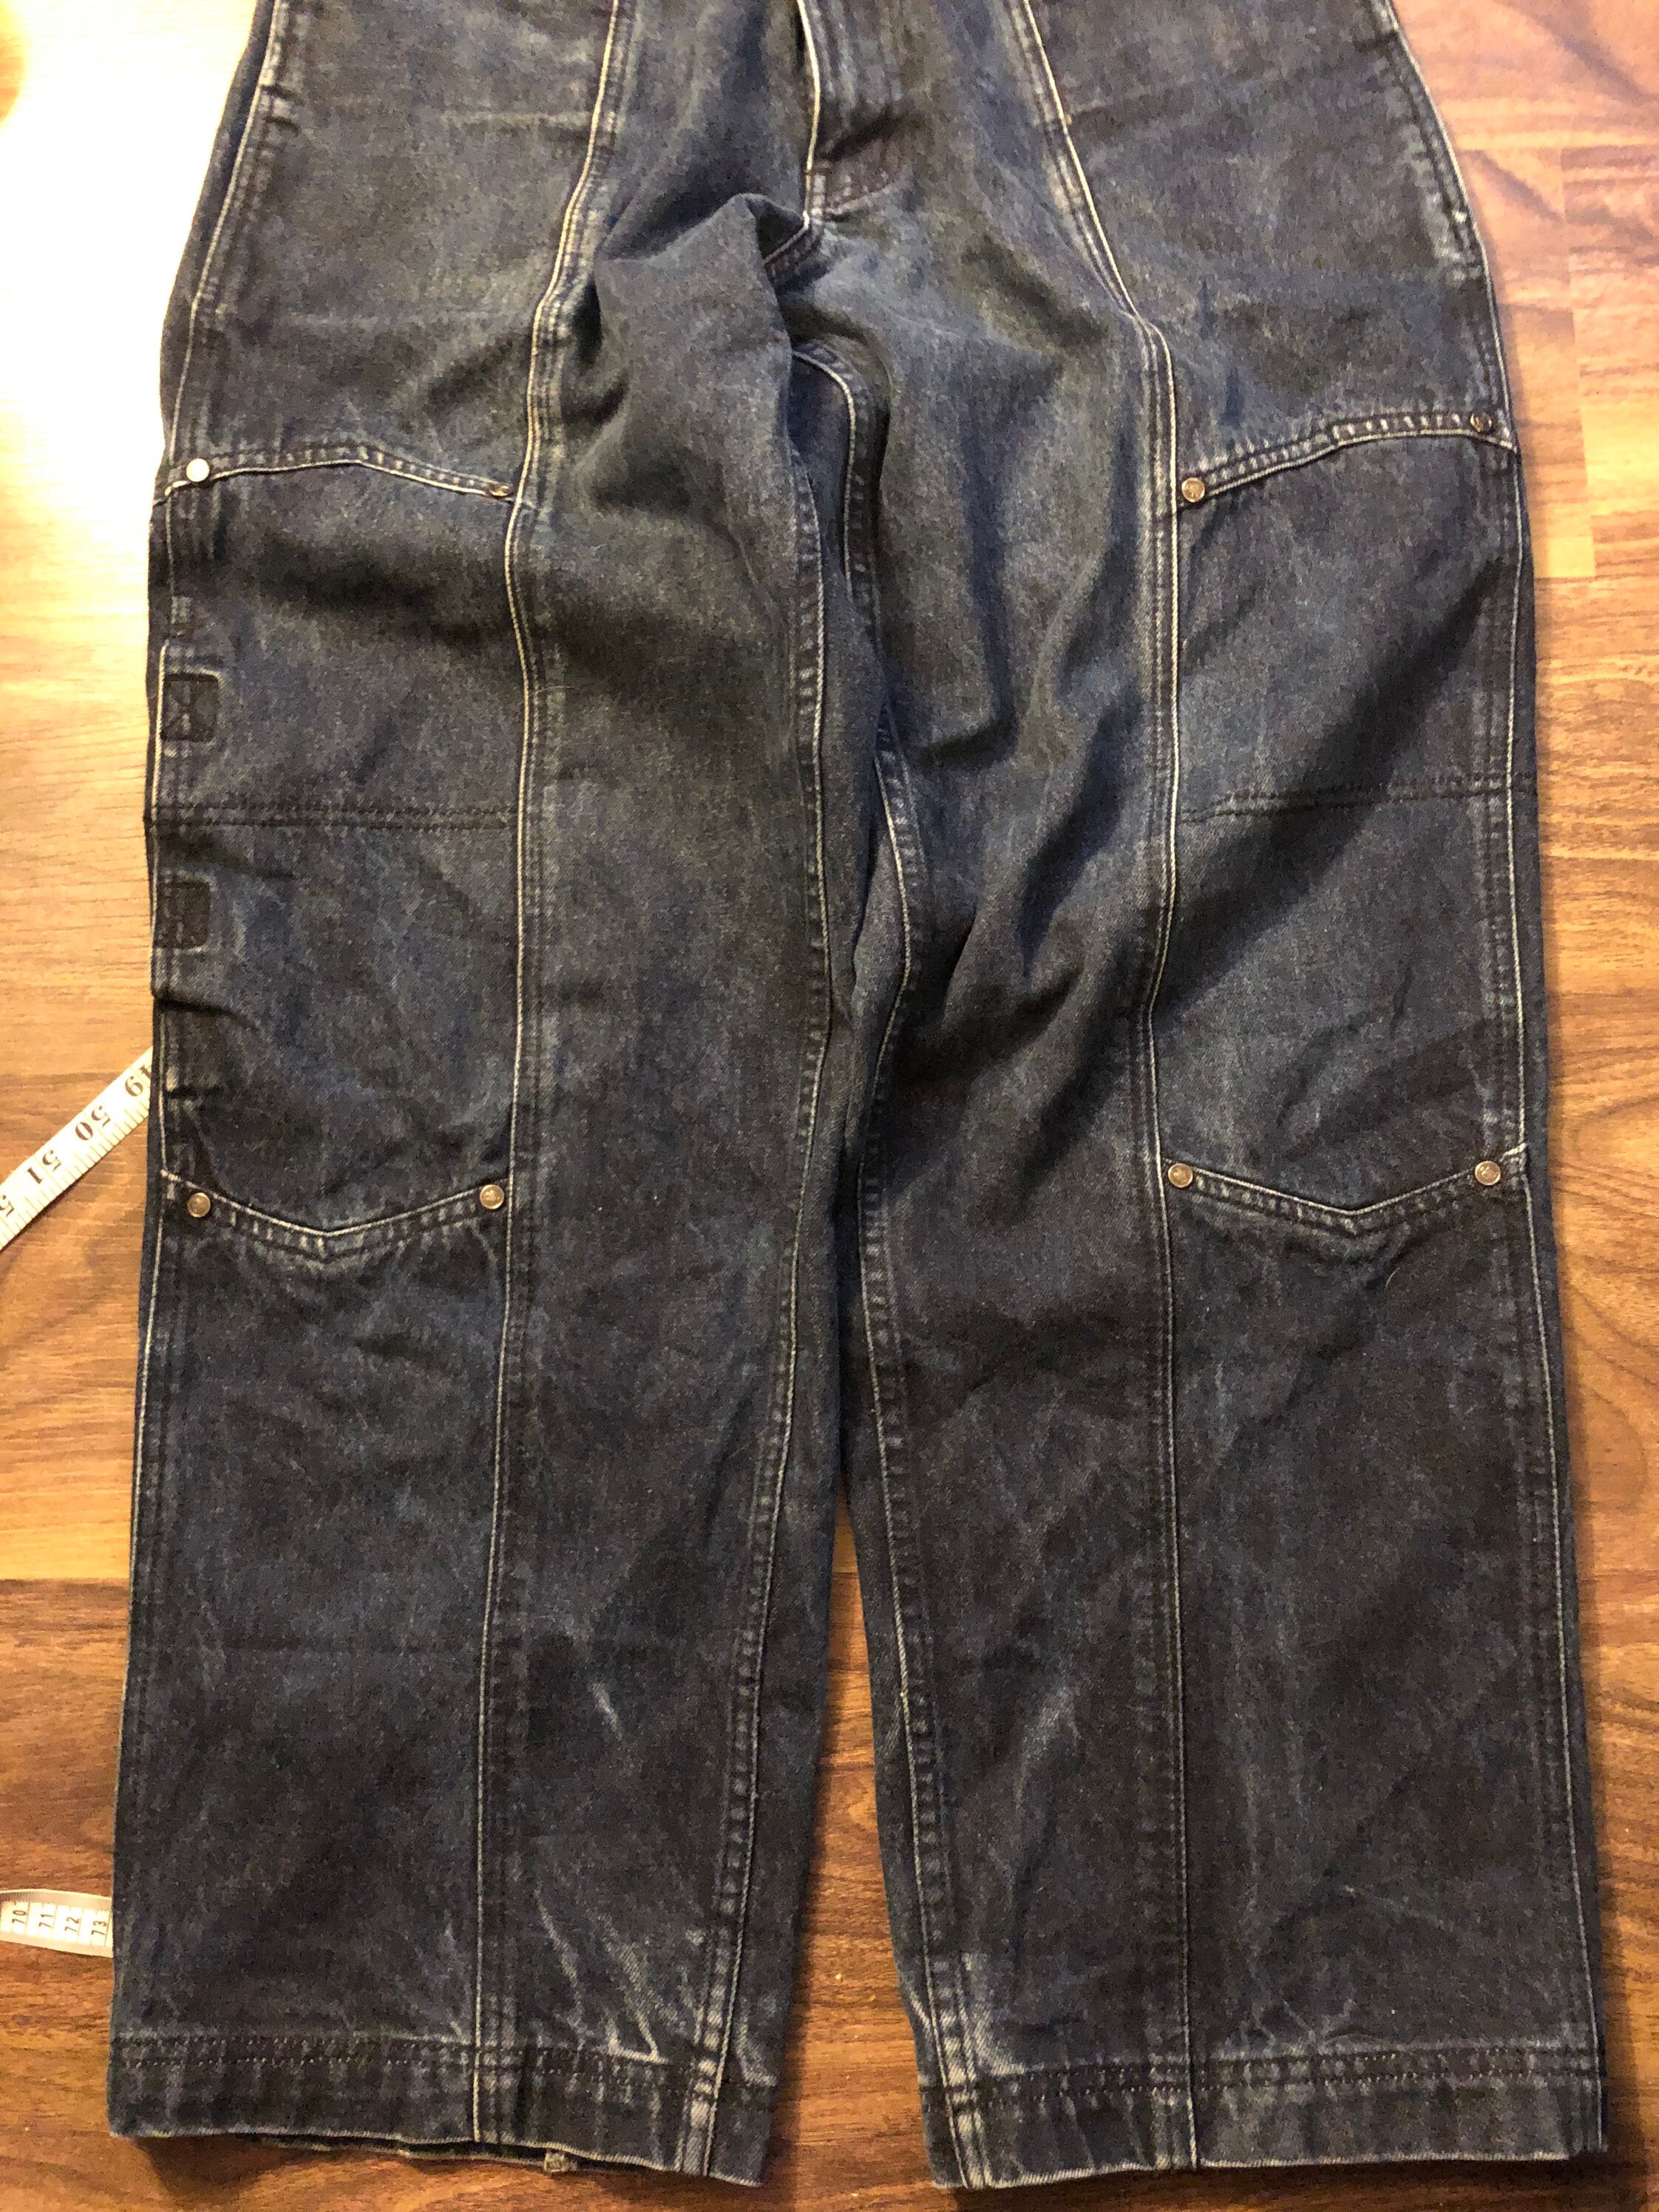 Vintage Pelle Pelle Jeans Marc Buchanan Double Knee Grail - Etsy Canada